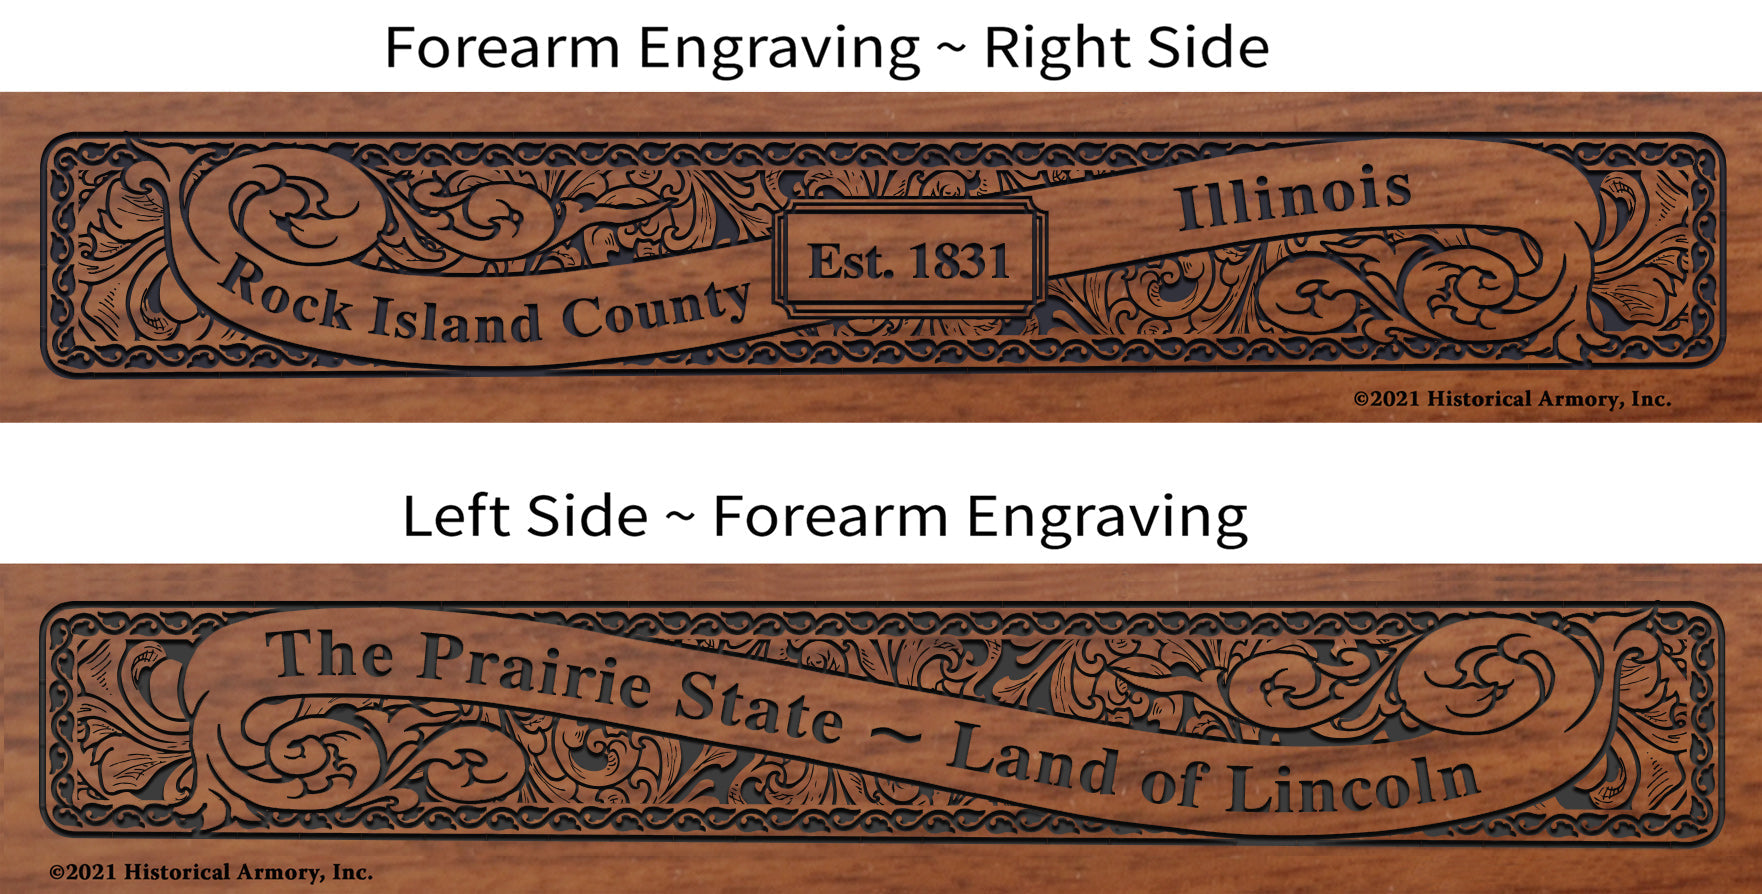 Rock Island County Illinois Establishment and Motto History Engraved Rifle Forearm